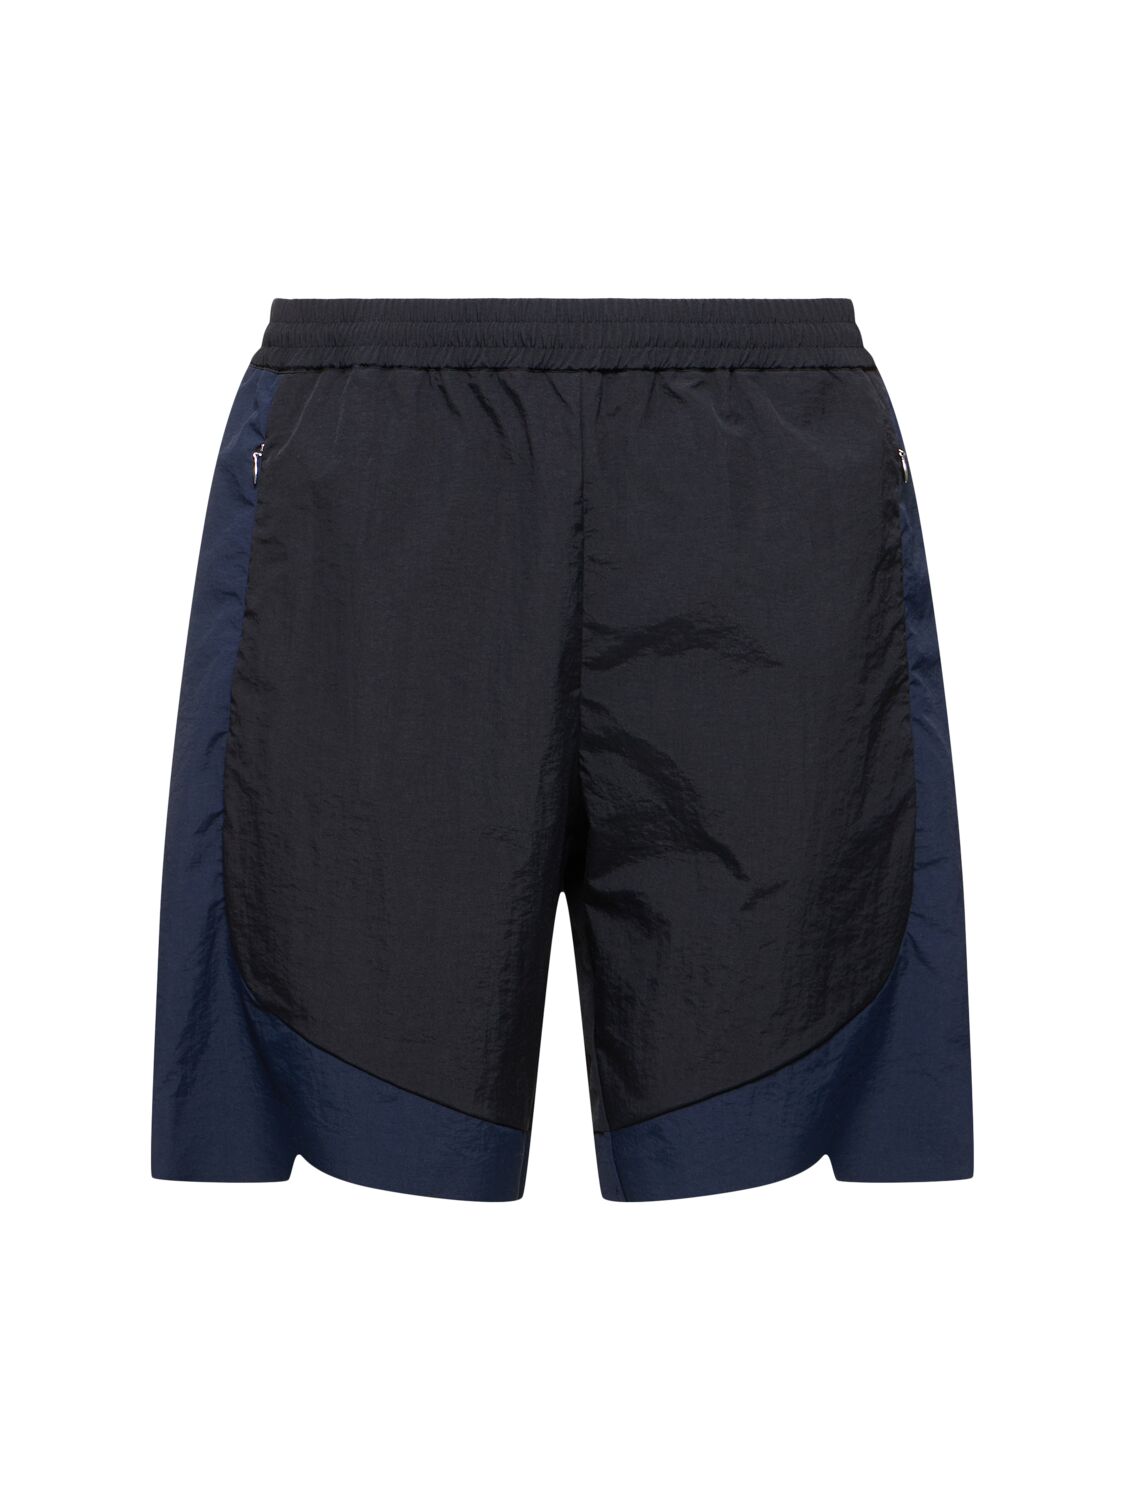 Image of Ultralight Nylon Shorts